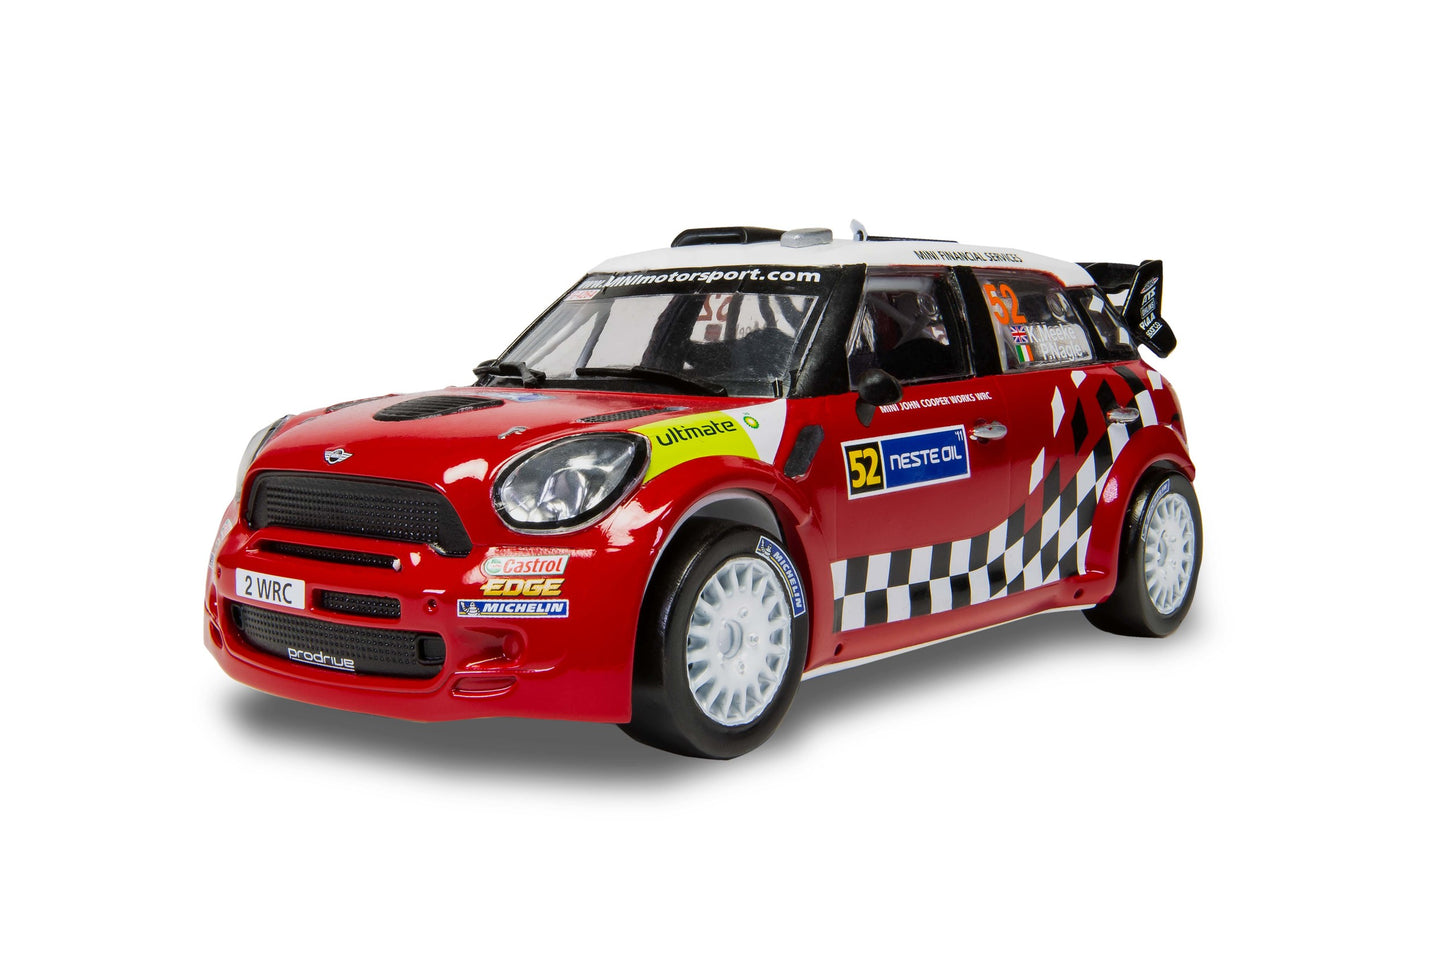 Airfix A55304 - Starter Set Mini Countryman WRC